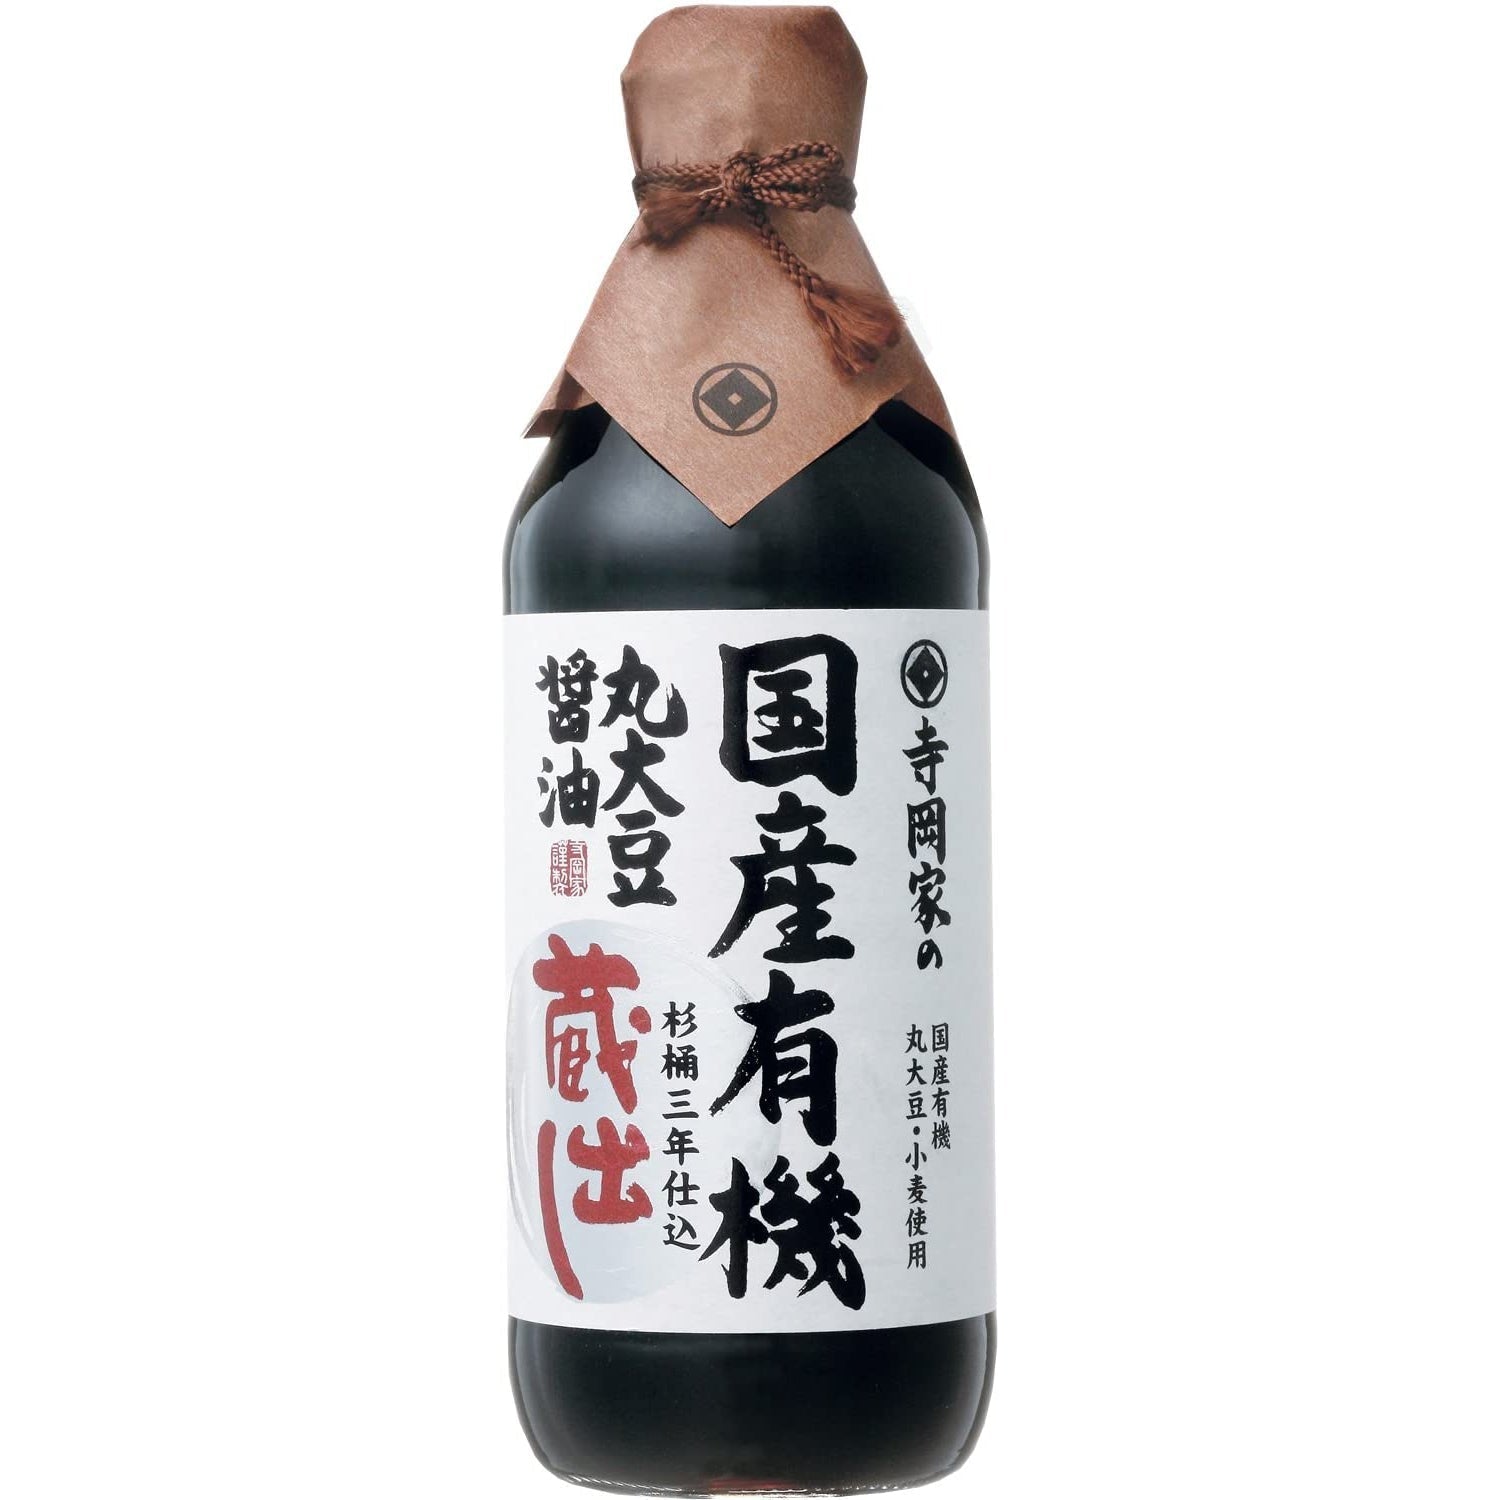 Teraoka Organic Shoyu Japanese Barrel Aged Soy Sauce 500ml